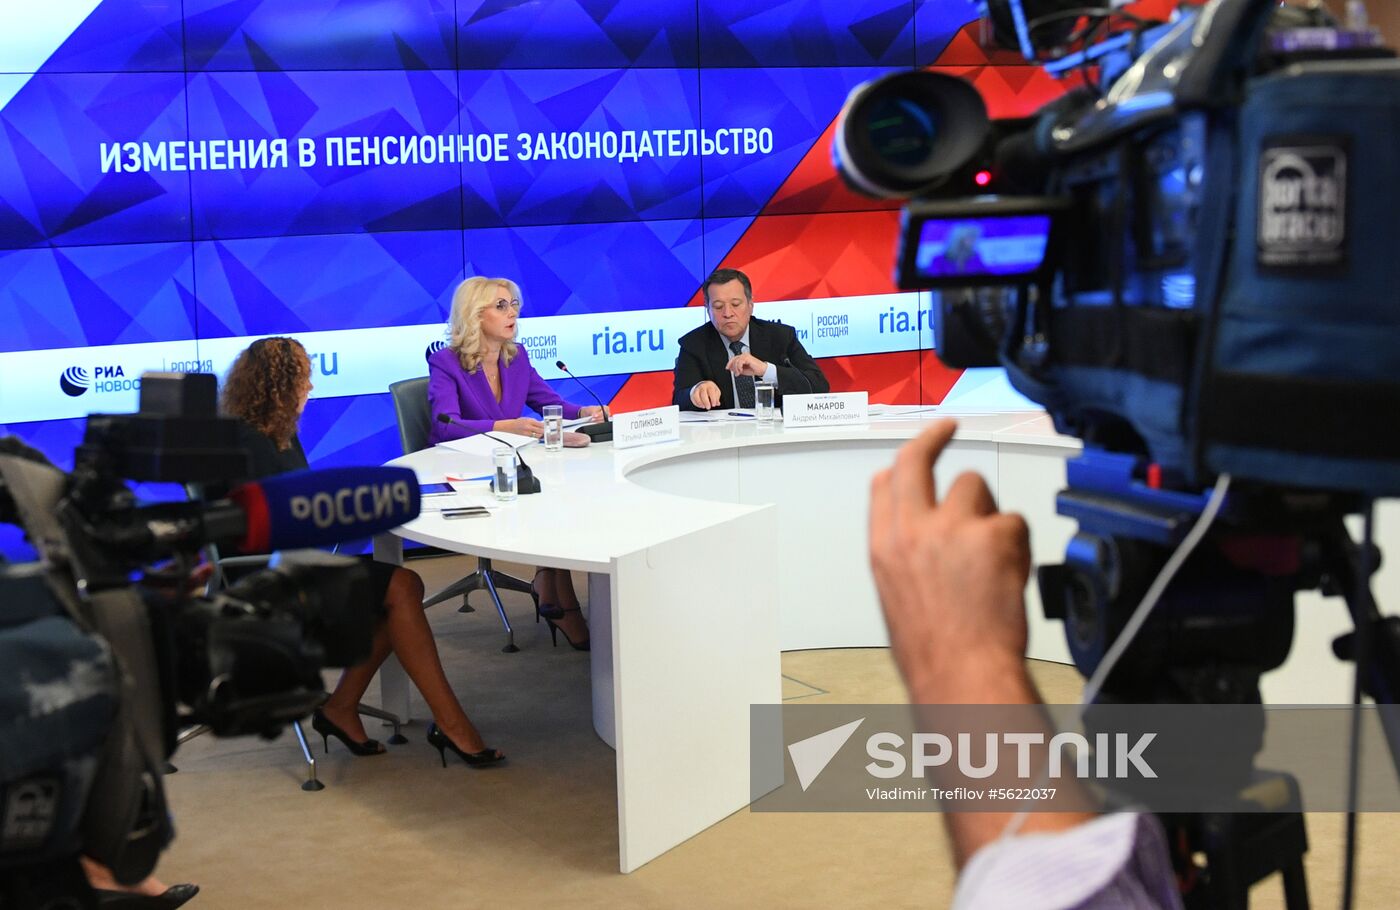 News conference by Deputy Prime Minister Tatyana Golikova and State Duma member Andrei Makarov